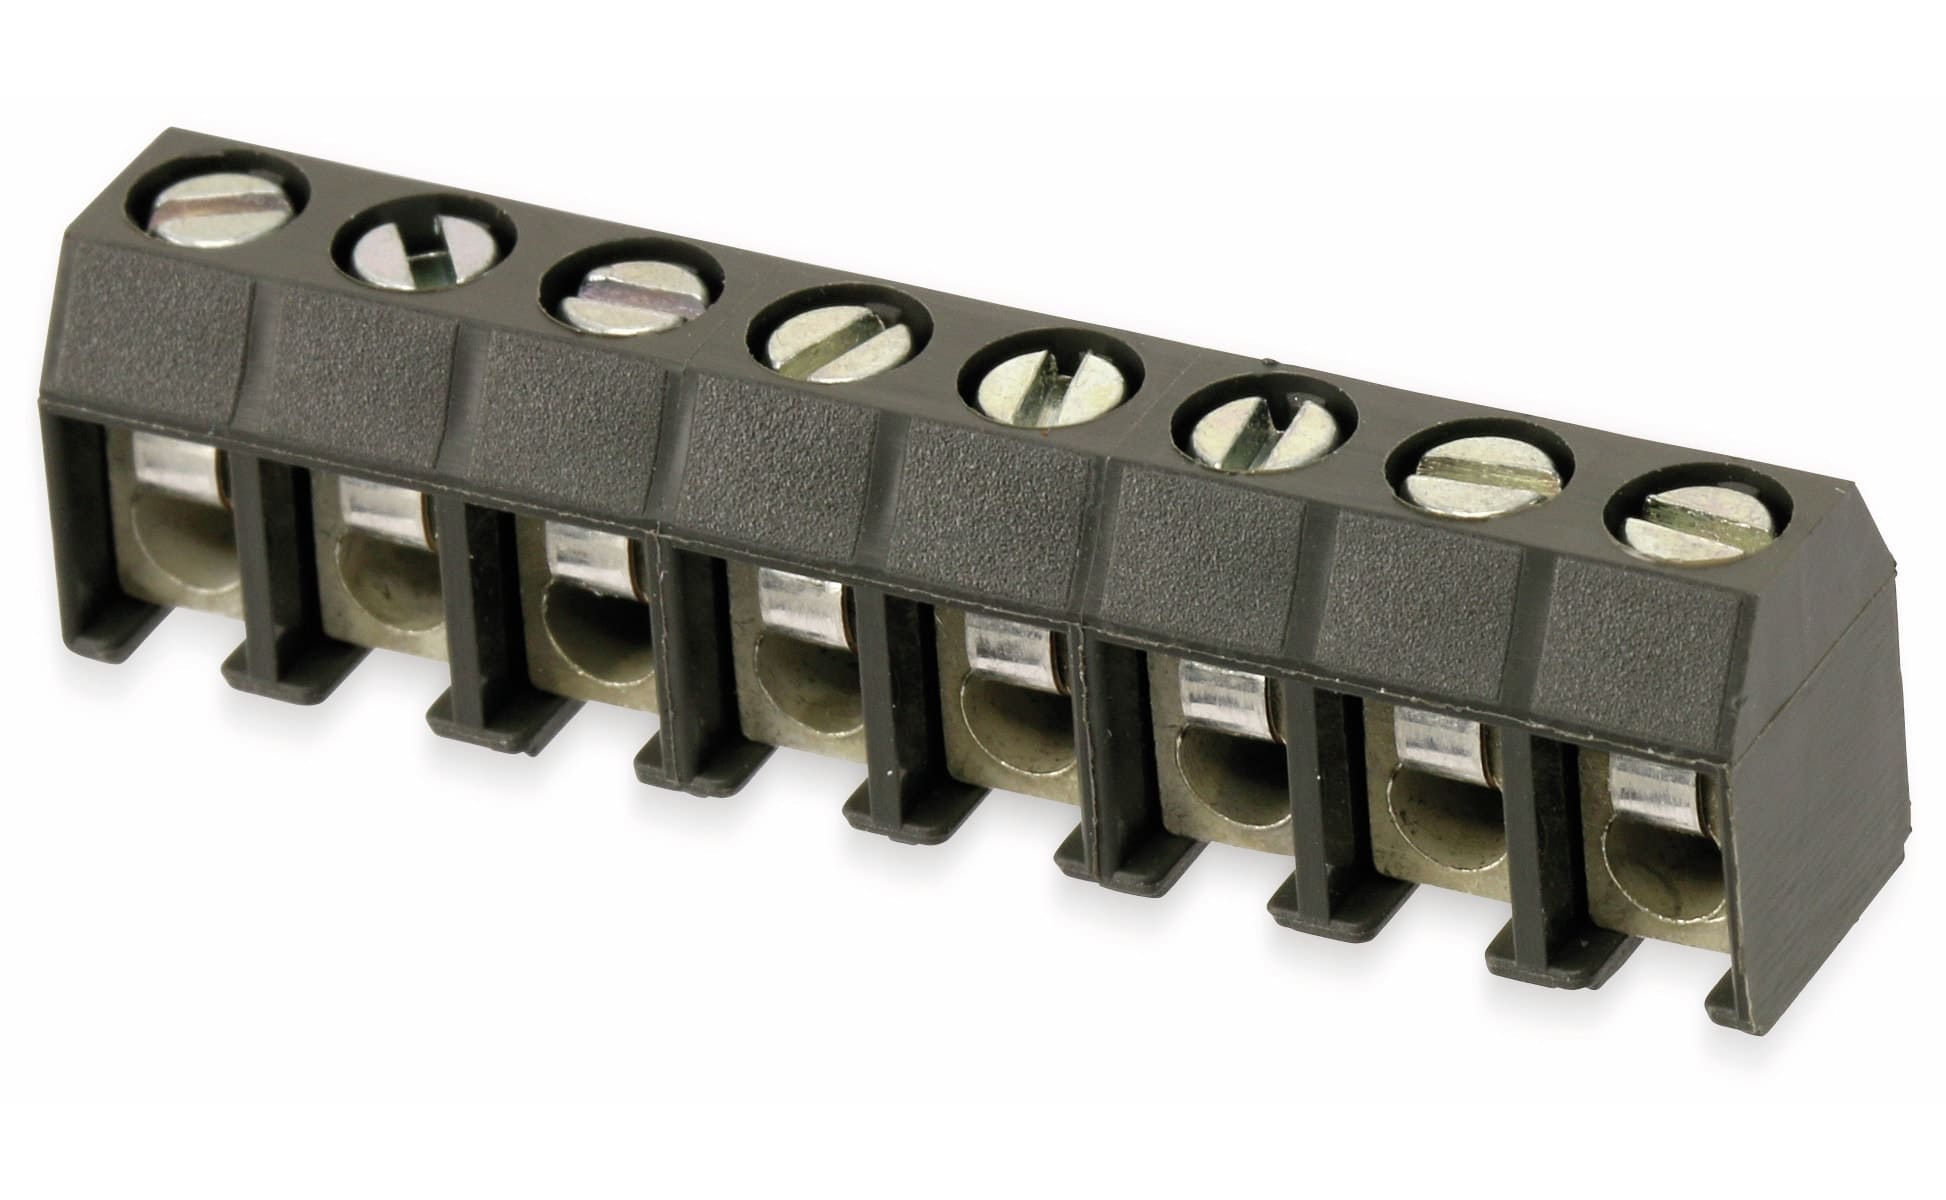 WECO LeiterplattenAnschlussklemme 951-DS/08, 8-polig, RM 5, 15 A/300 V